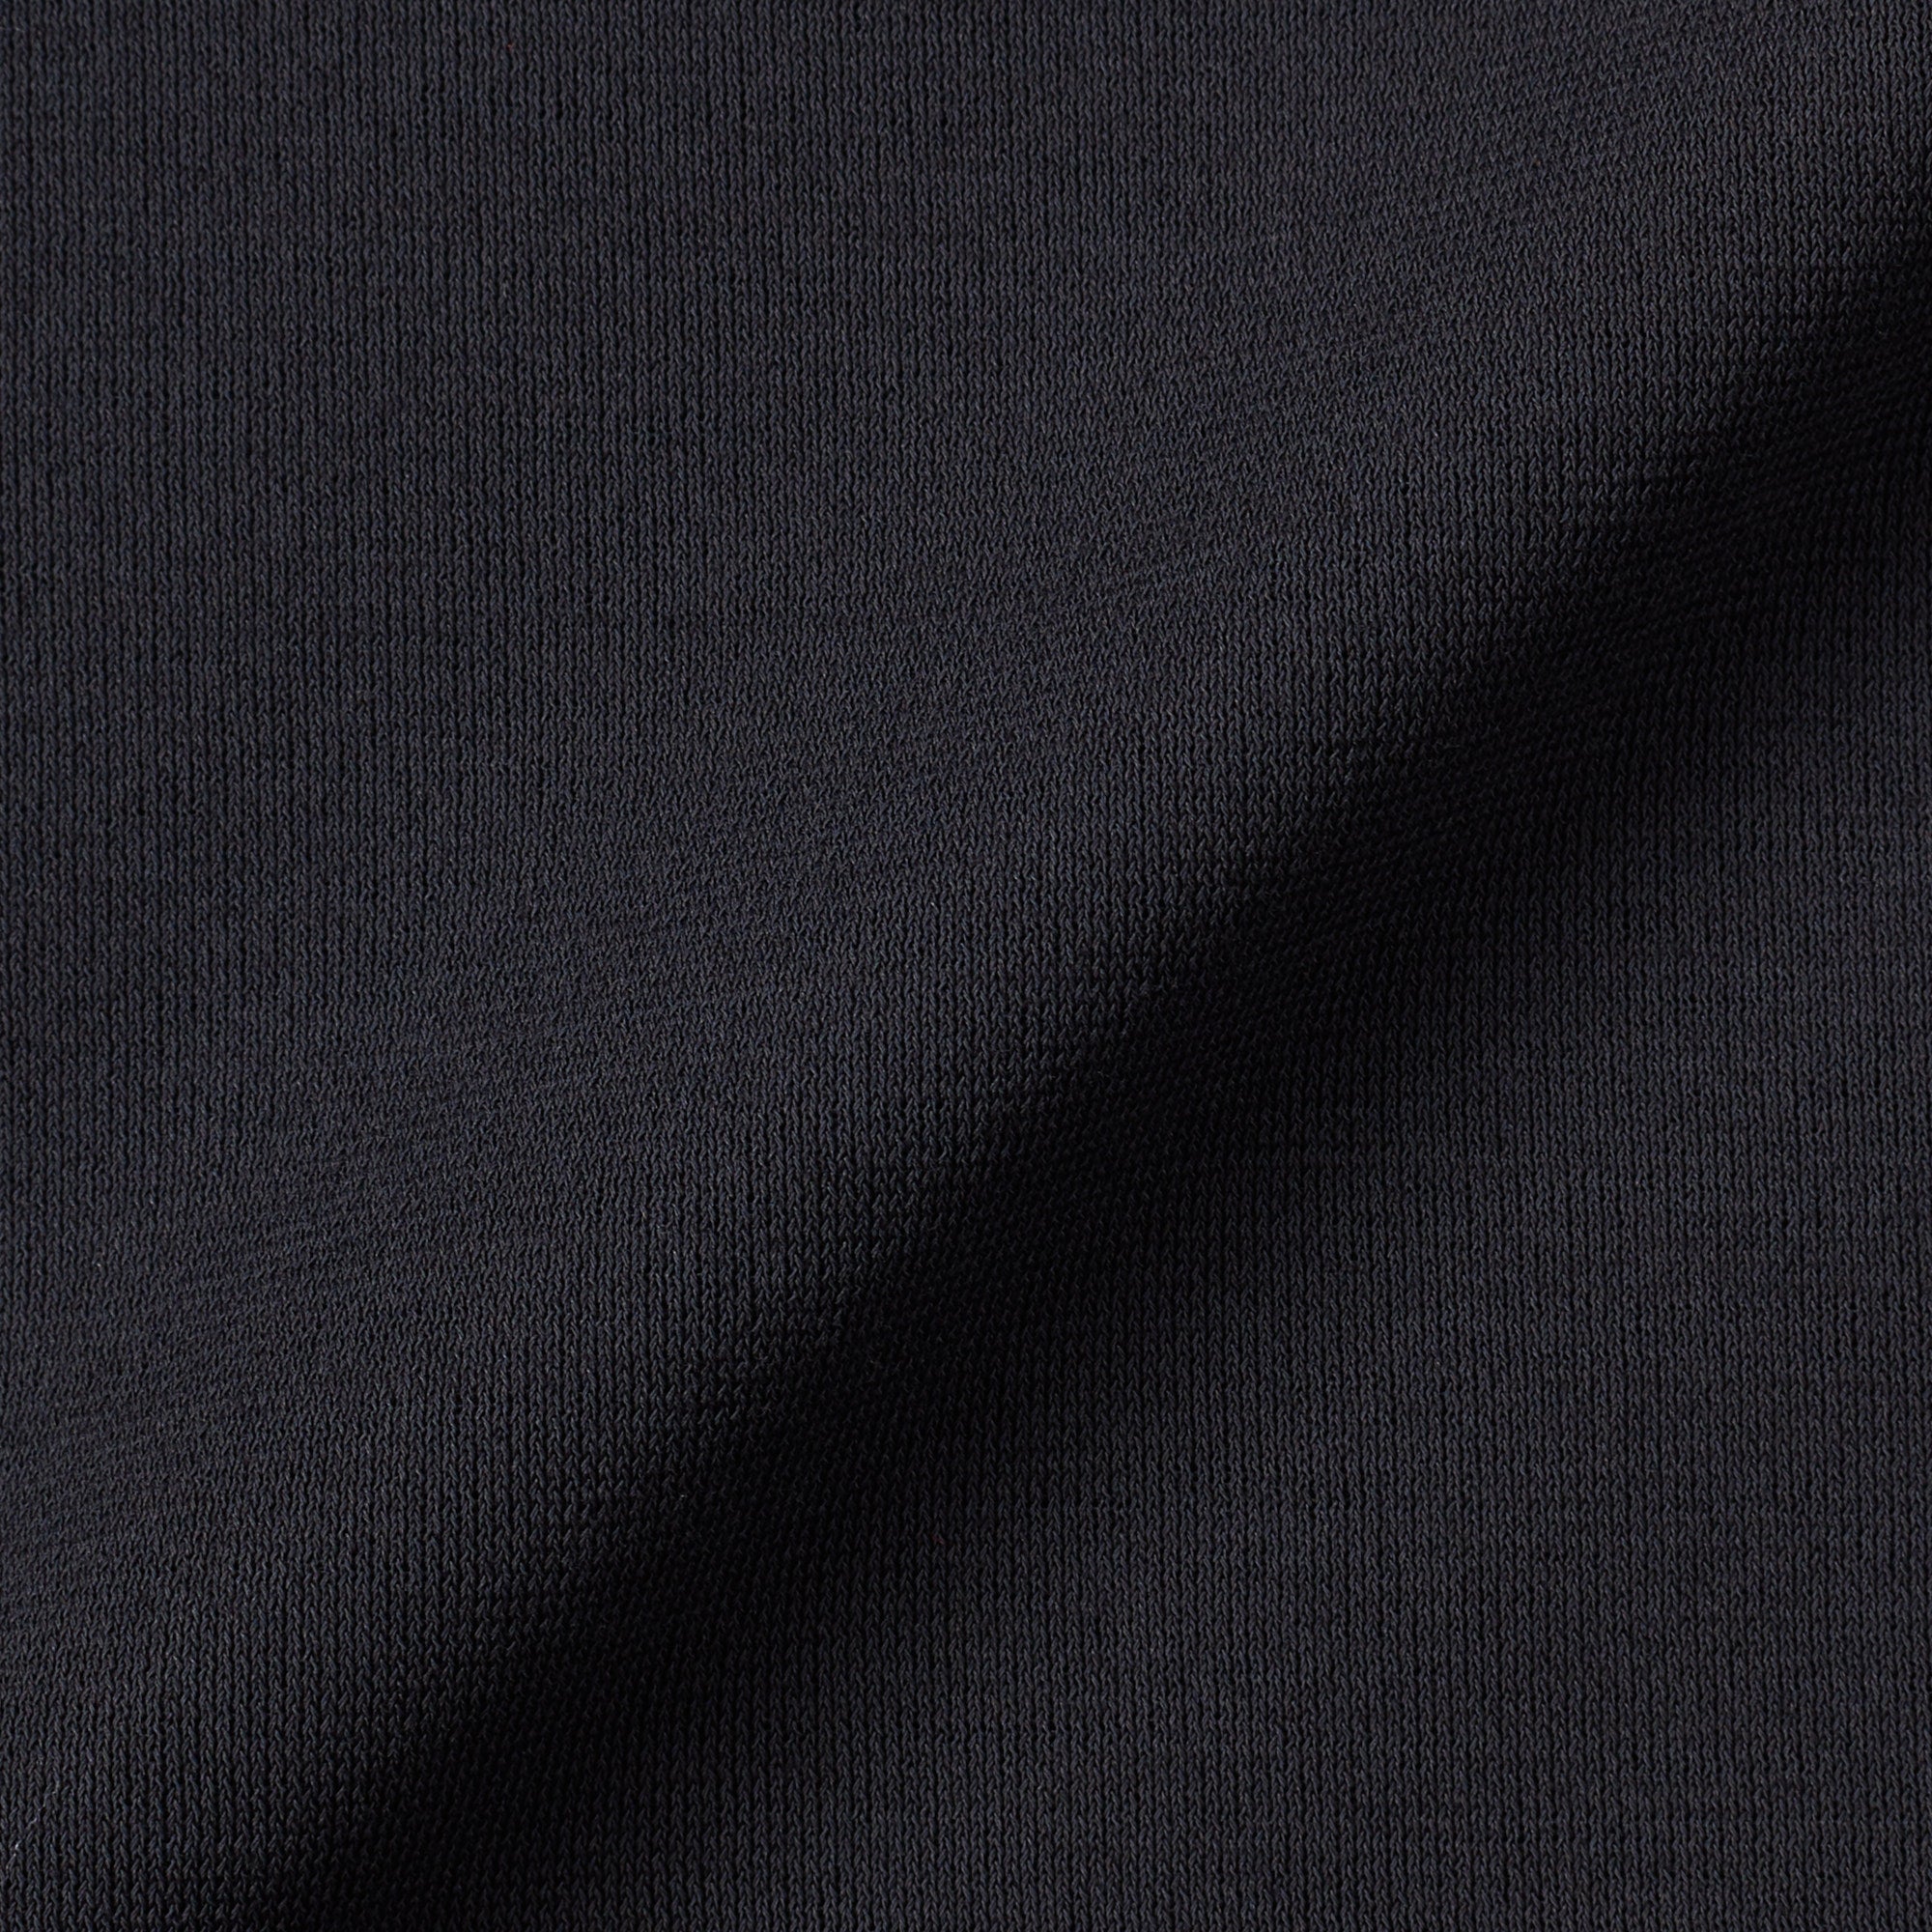 Kiton KIRED "Positano" Dark Blue Exclusive Crepe Cotton Short Sleeve Polo Shirt 2023 KIRED